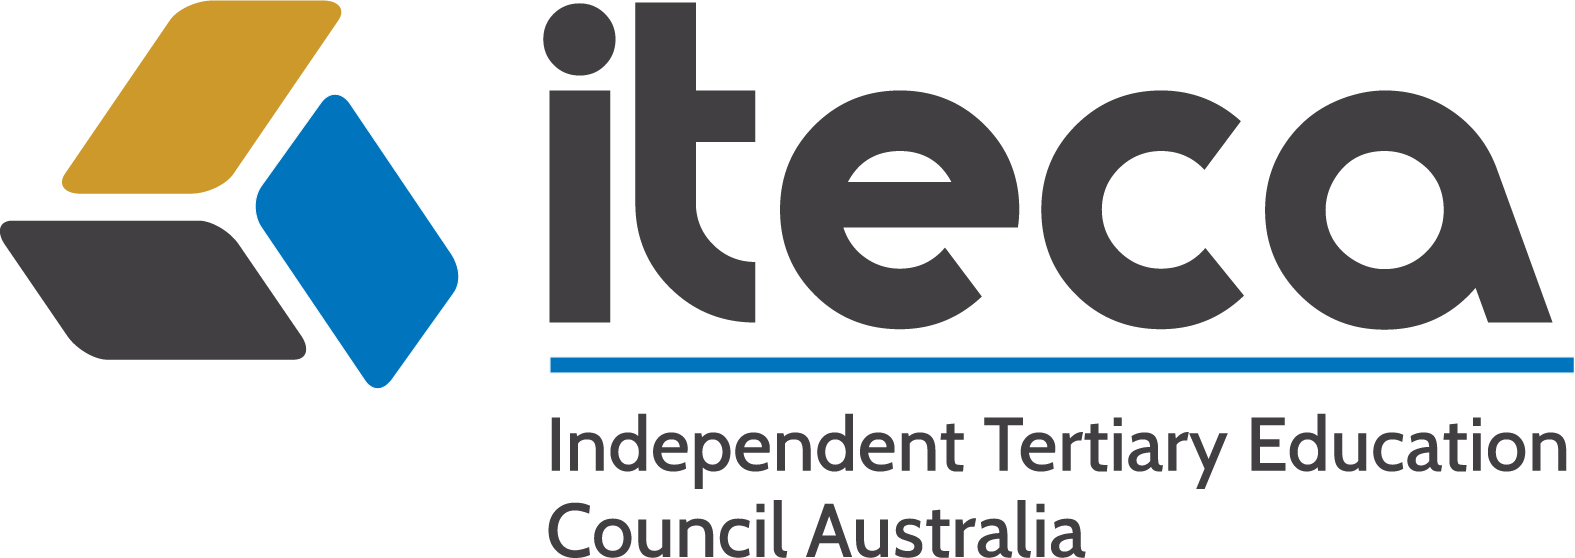 ITECA keynote speaker sponsor